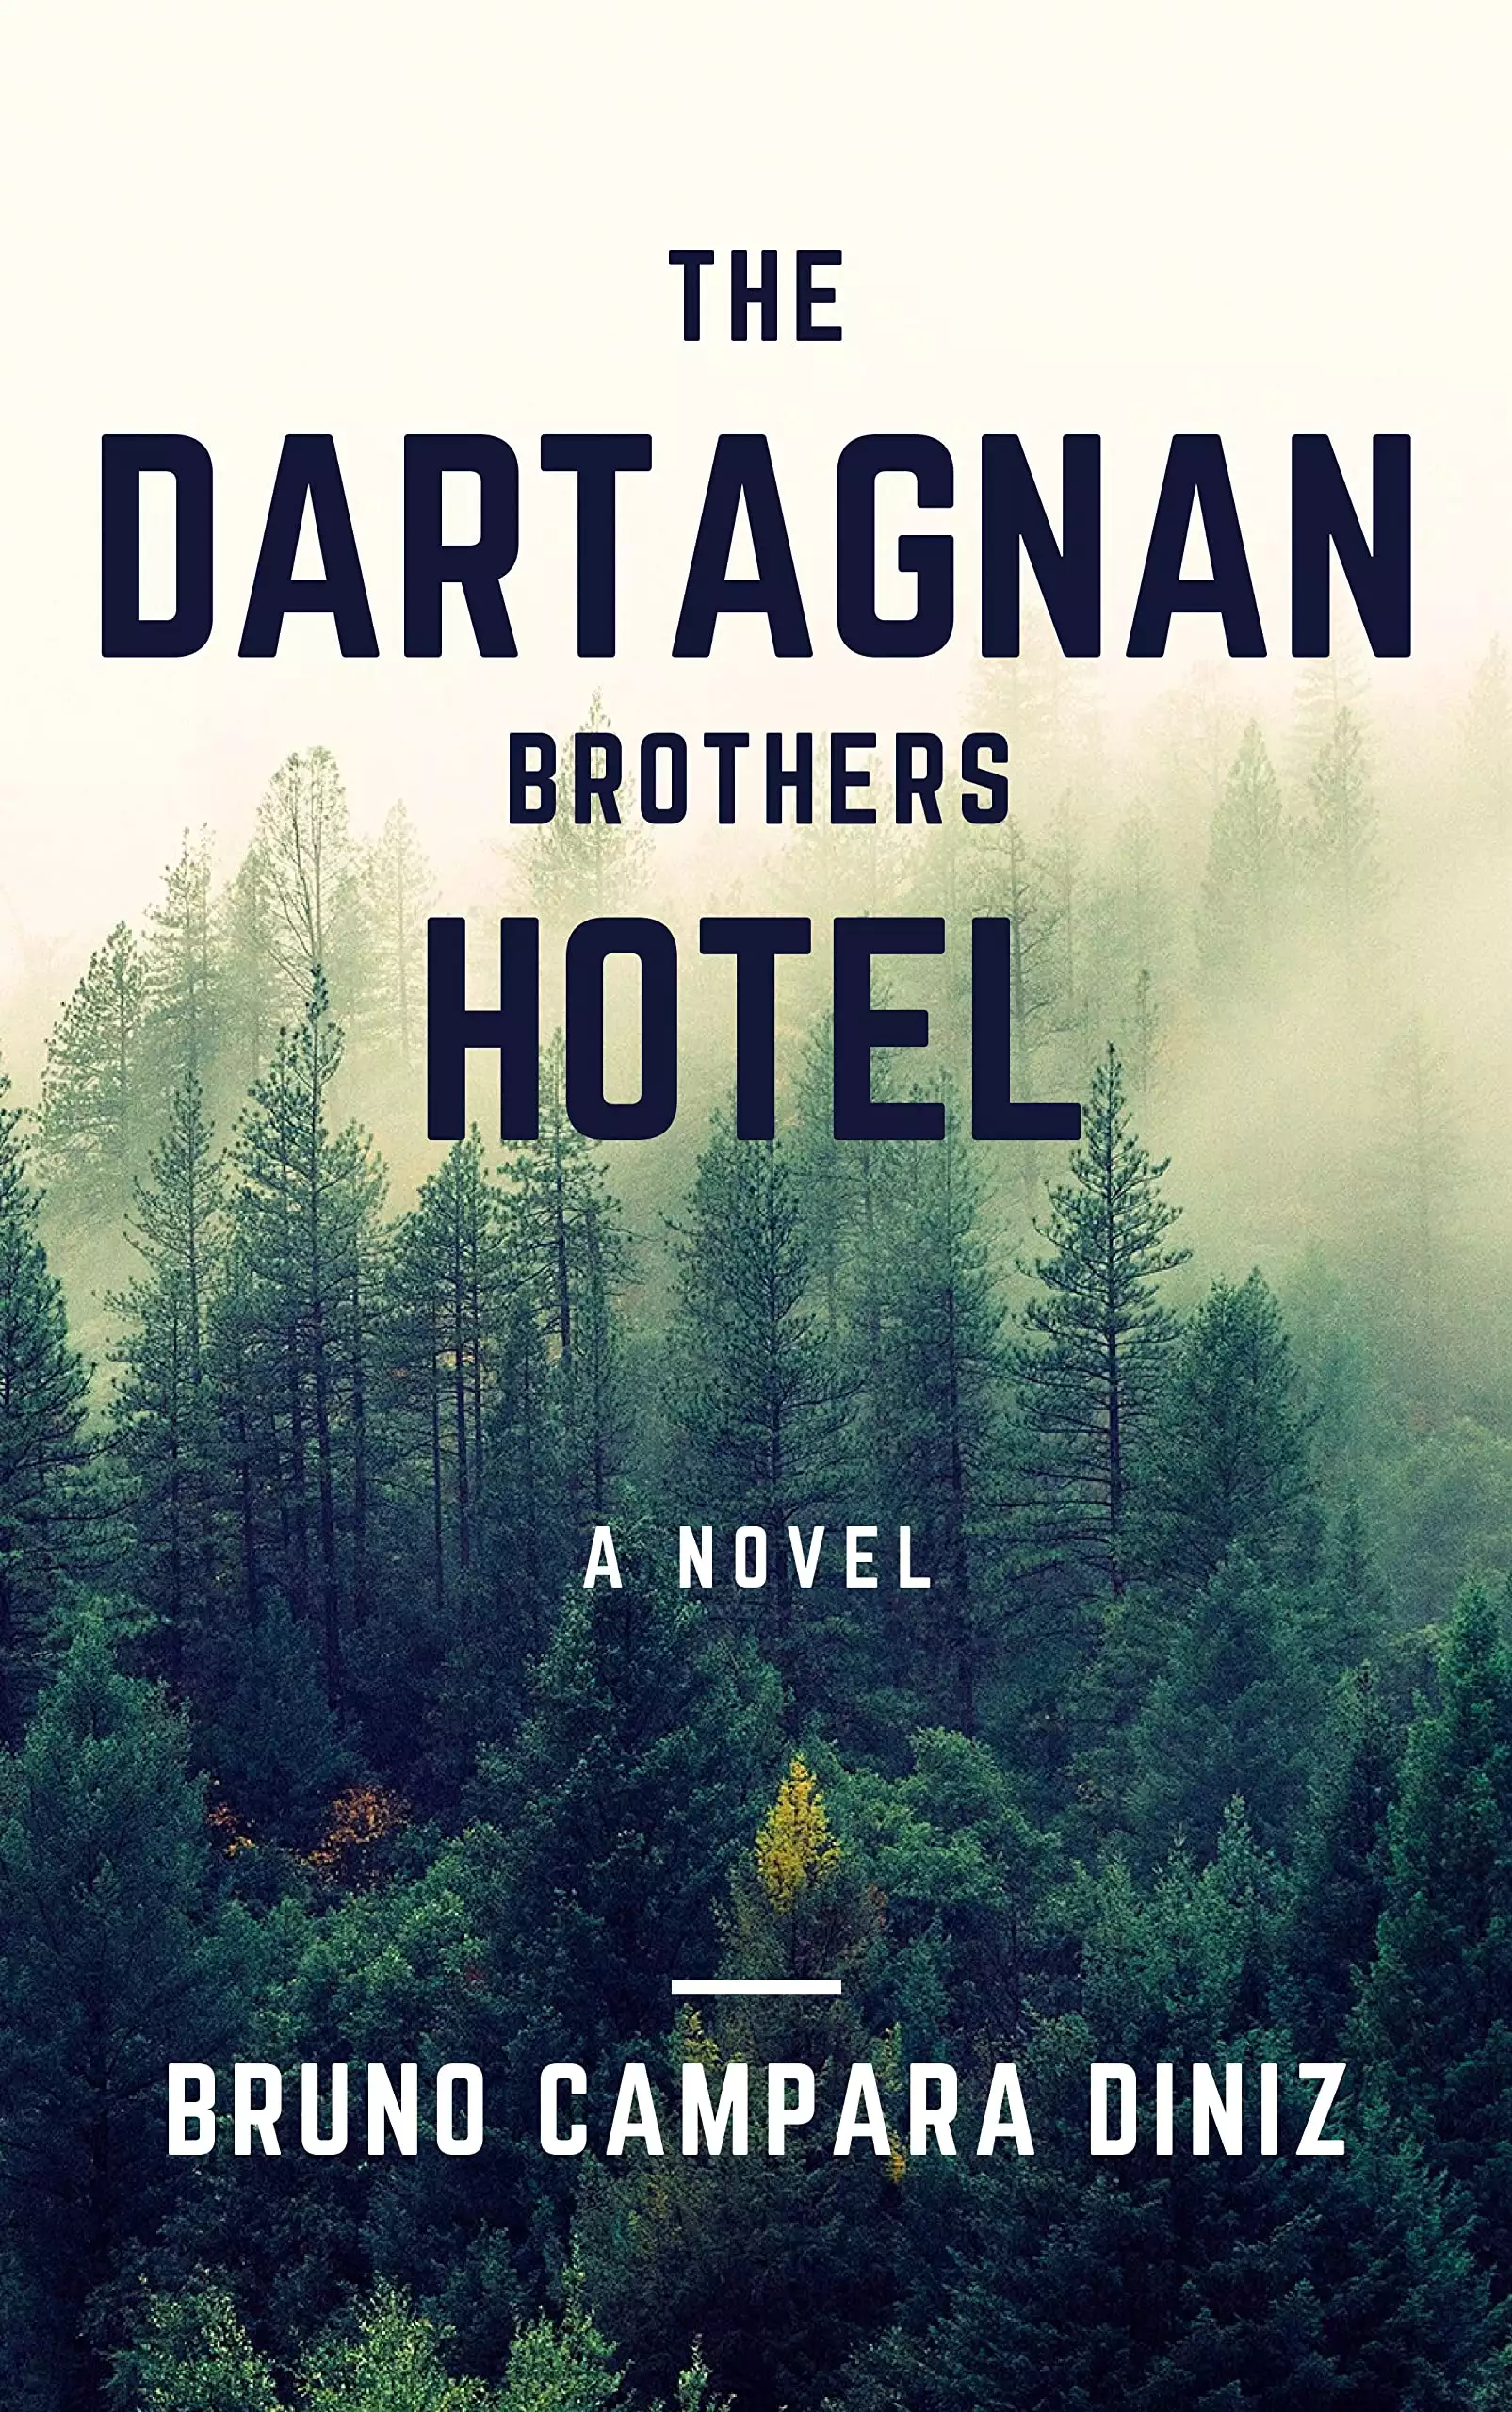 The Dartagnan Brothers Hotel